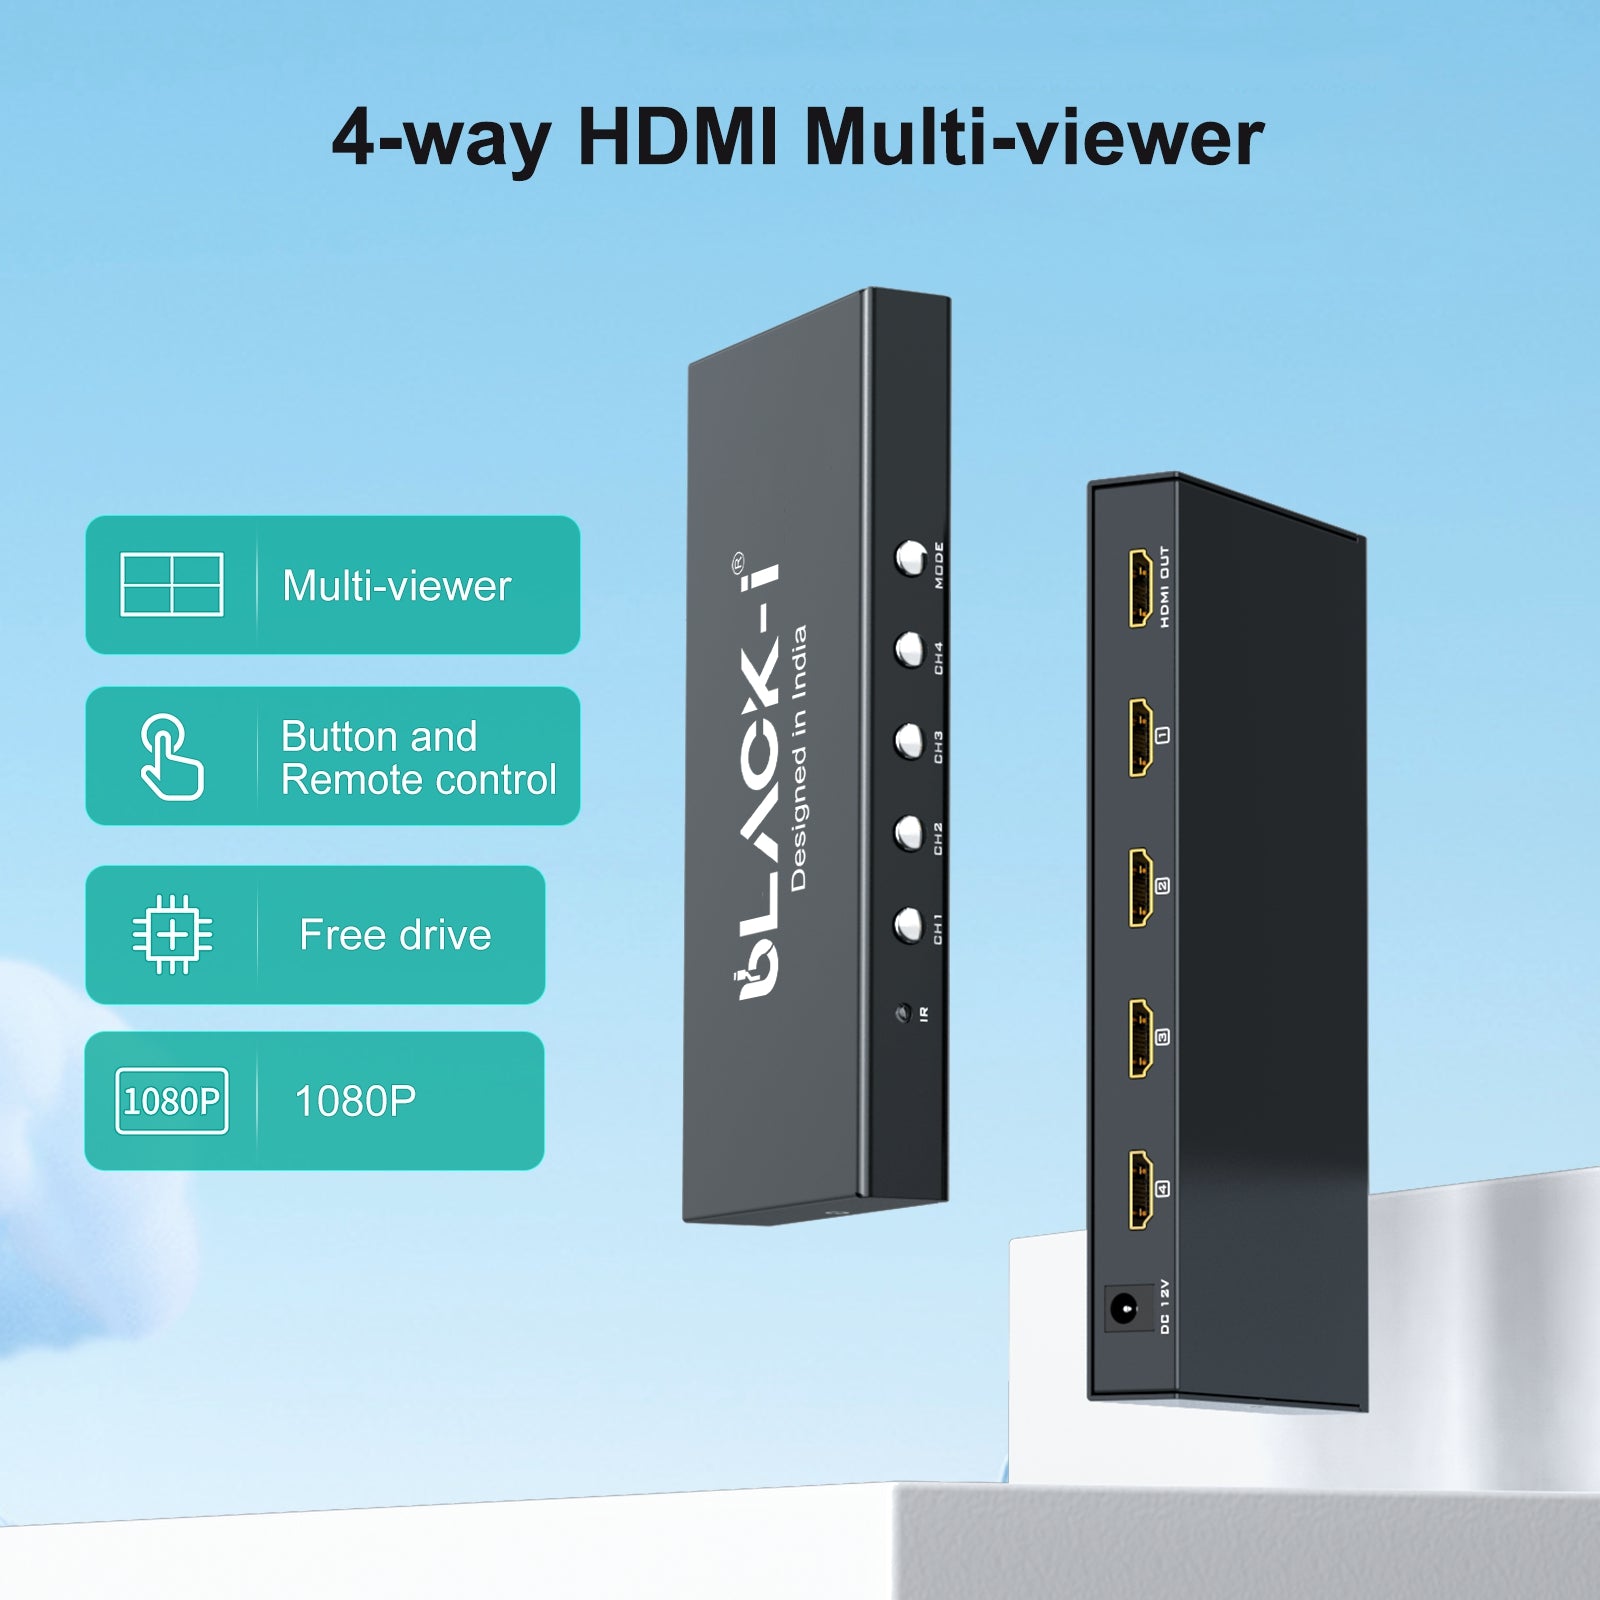 Black-i HDMI 4 Port Quad Screen Multiviewer